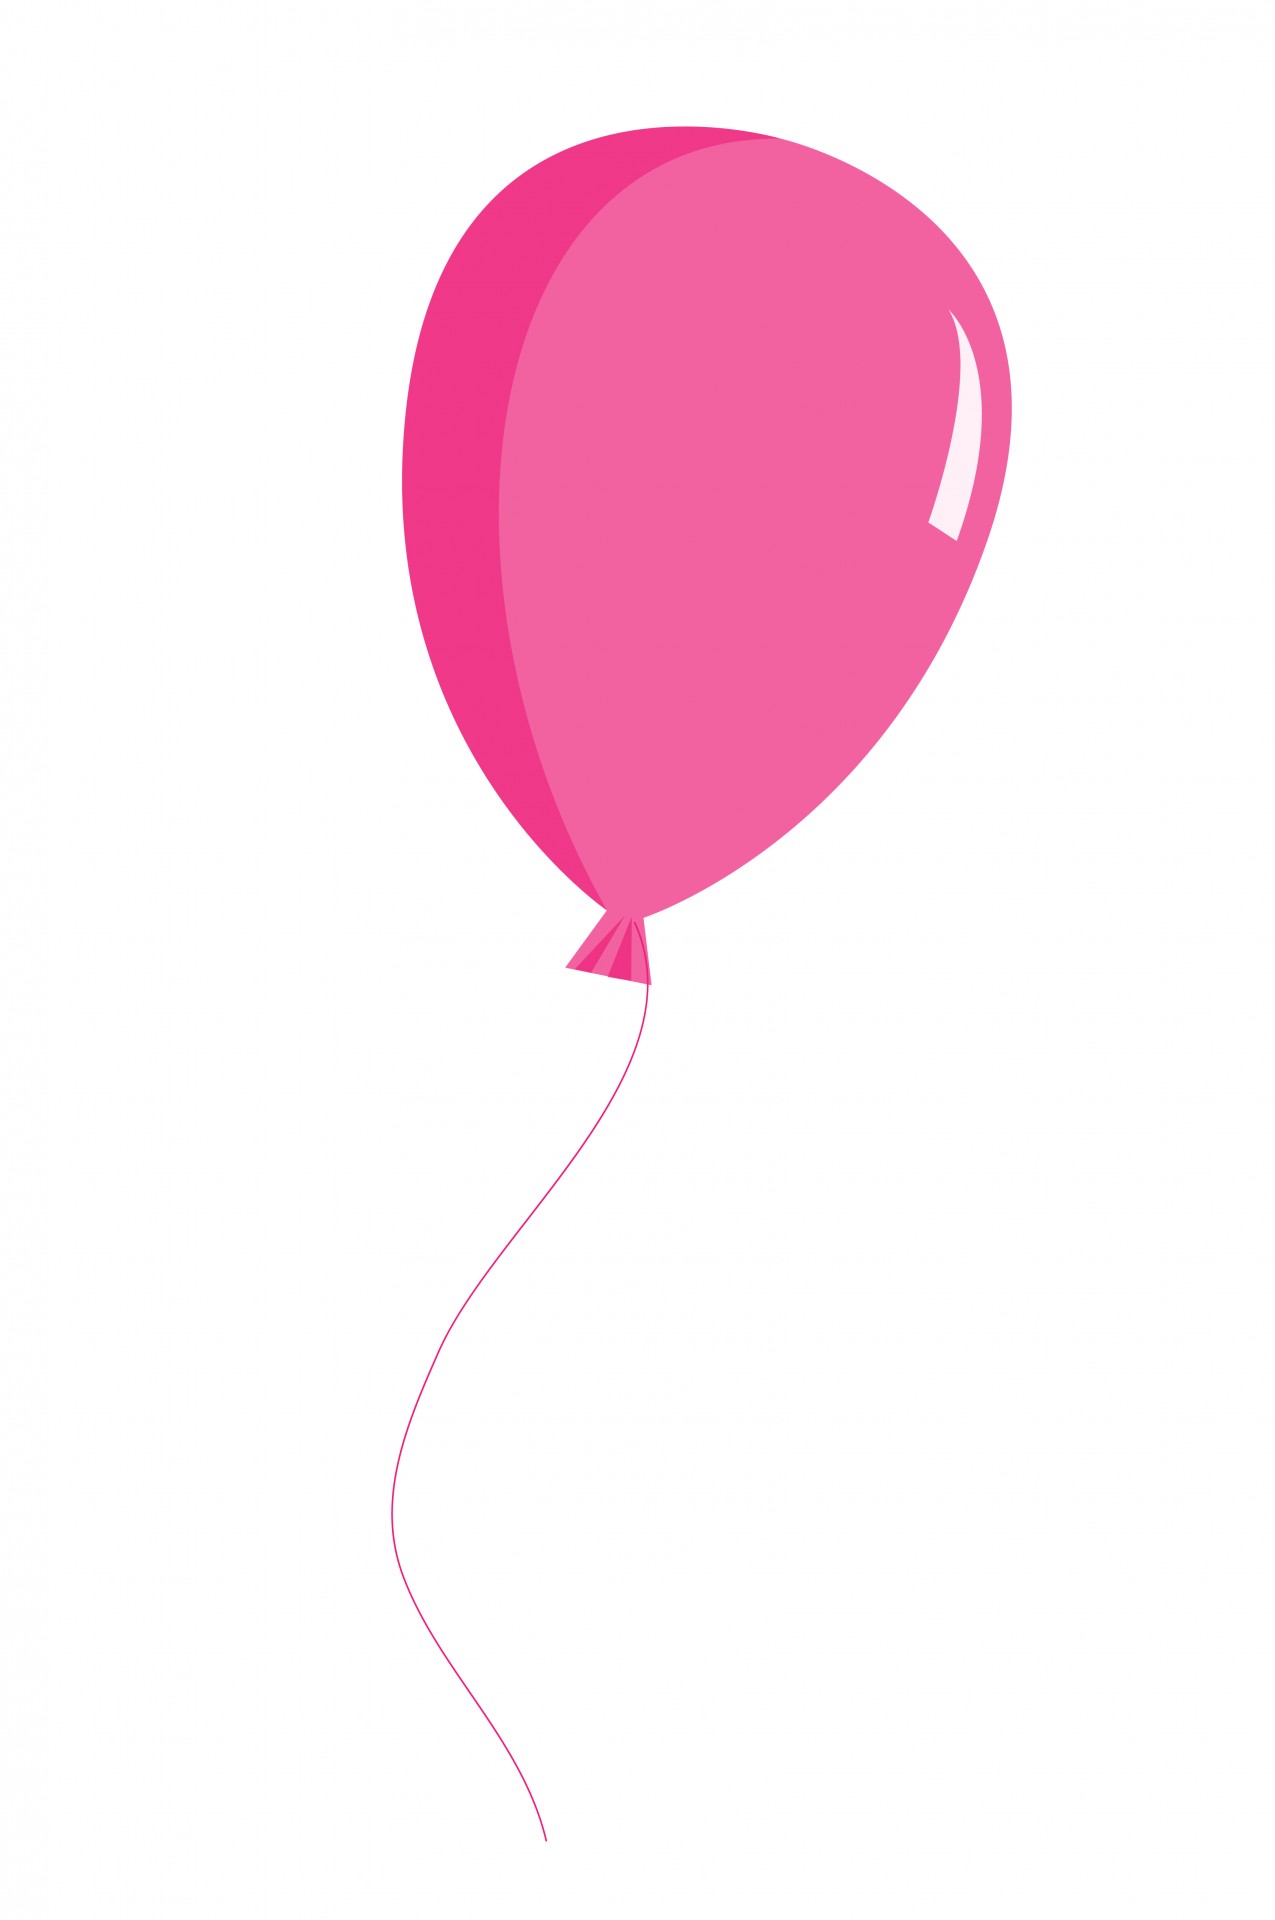 free clipart of balloon - photo #40